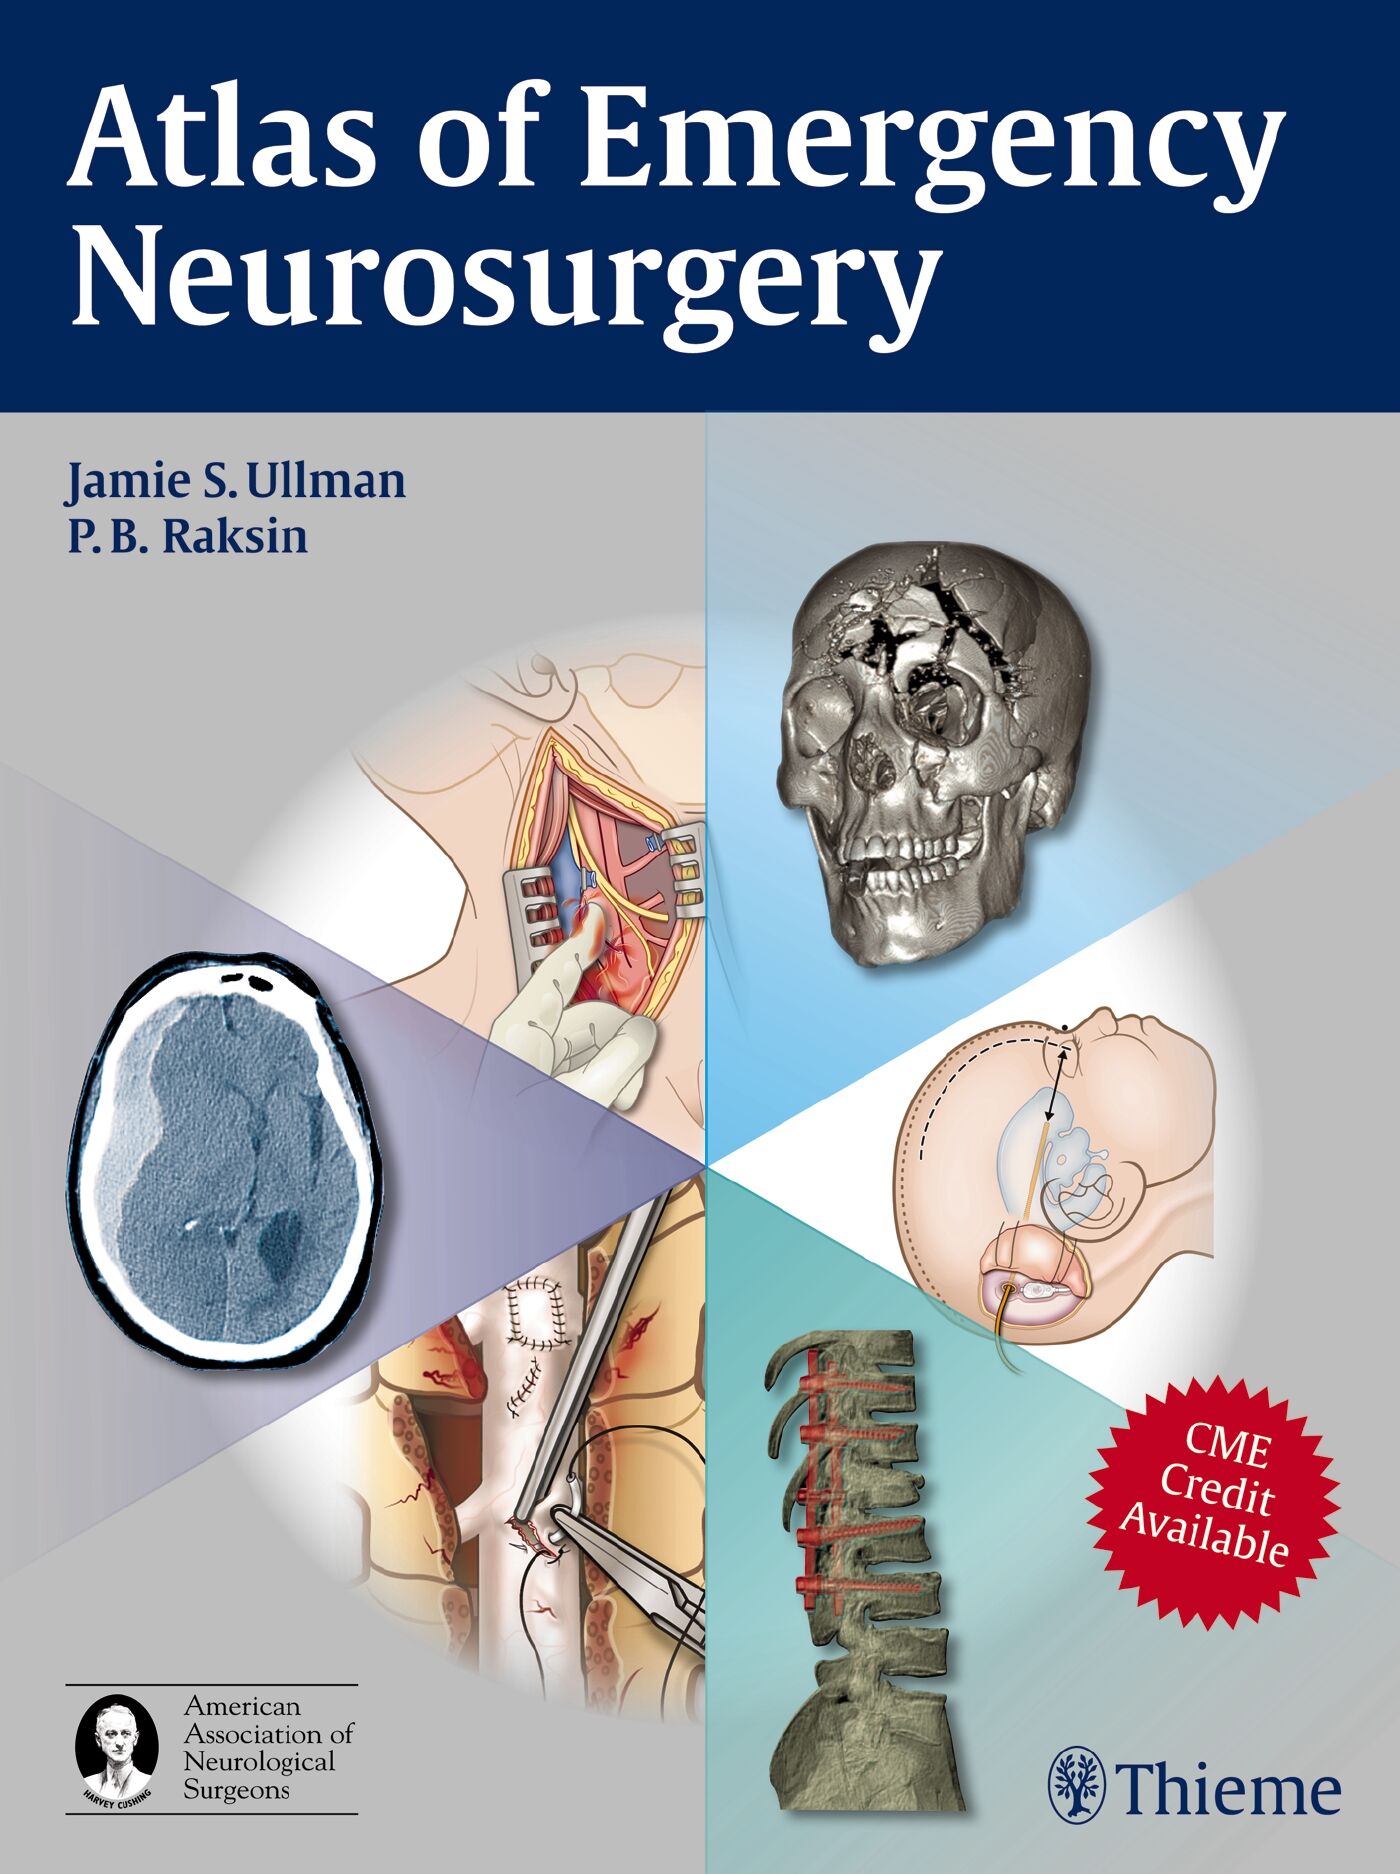 Atlas of Emergency Neurosurgery, 9781604063684